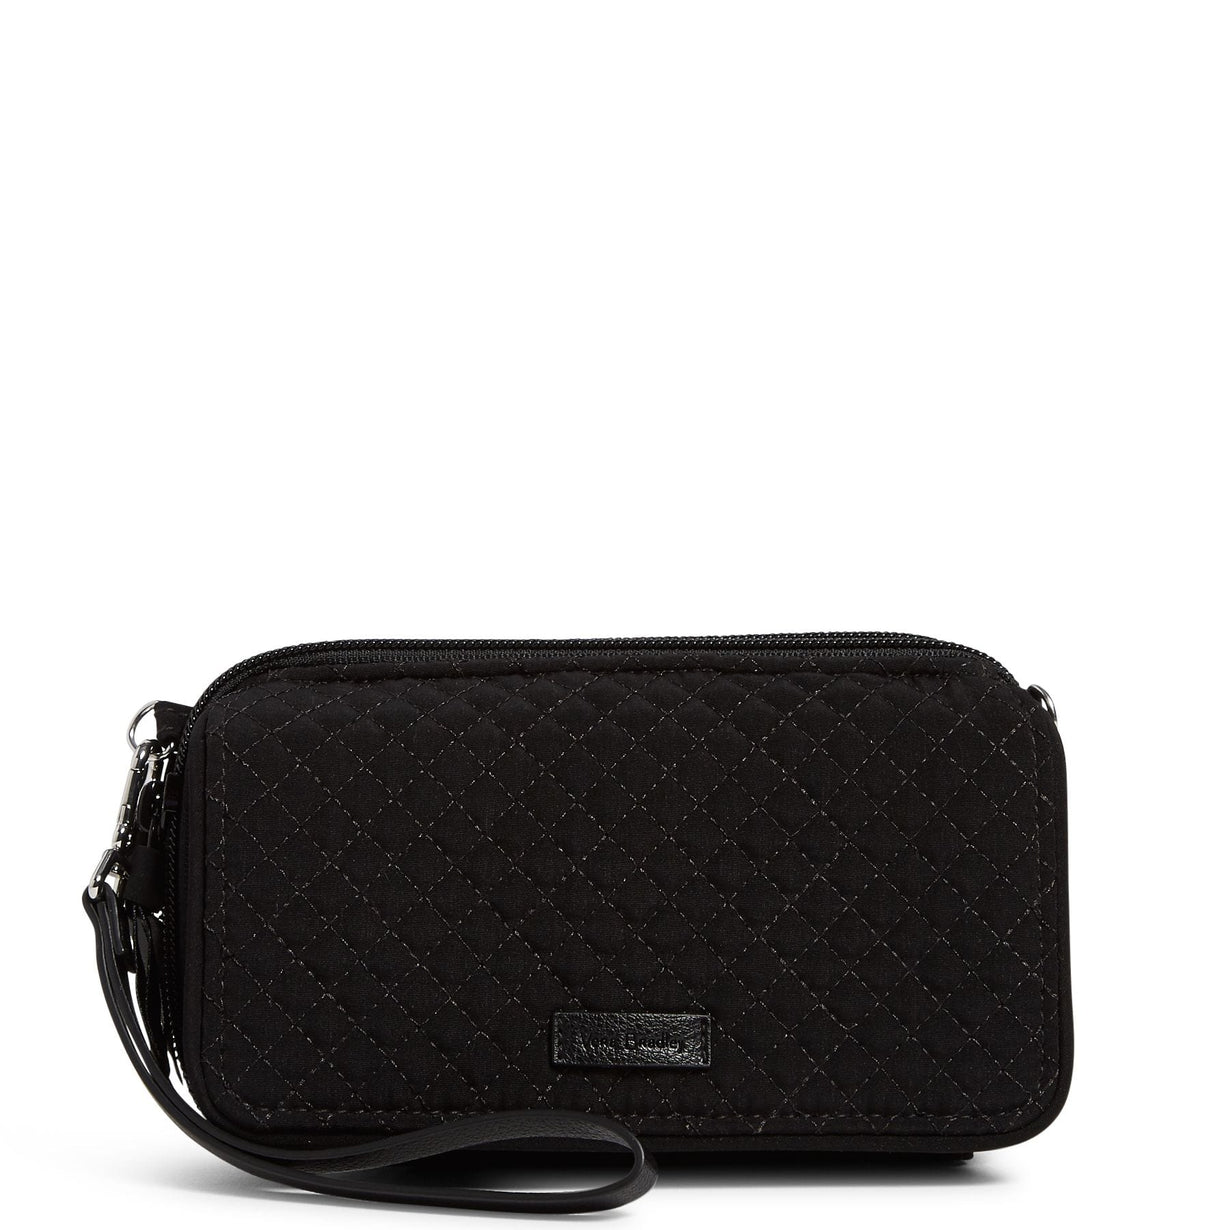 NWT Vera Bradley Handbag Purse Bag Black Microfiber Sophia | Vera bradley  handbags, Handbag, Purses